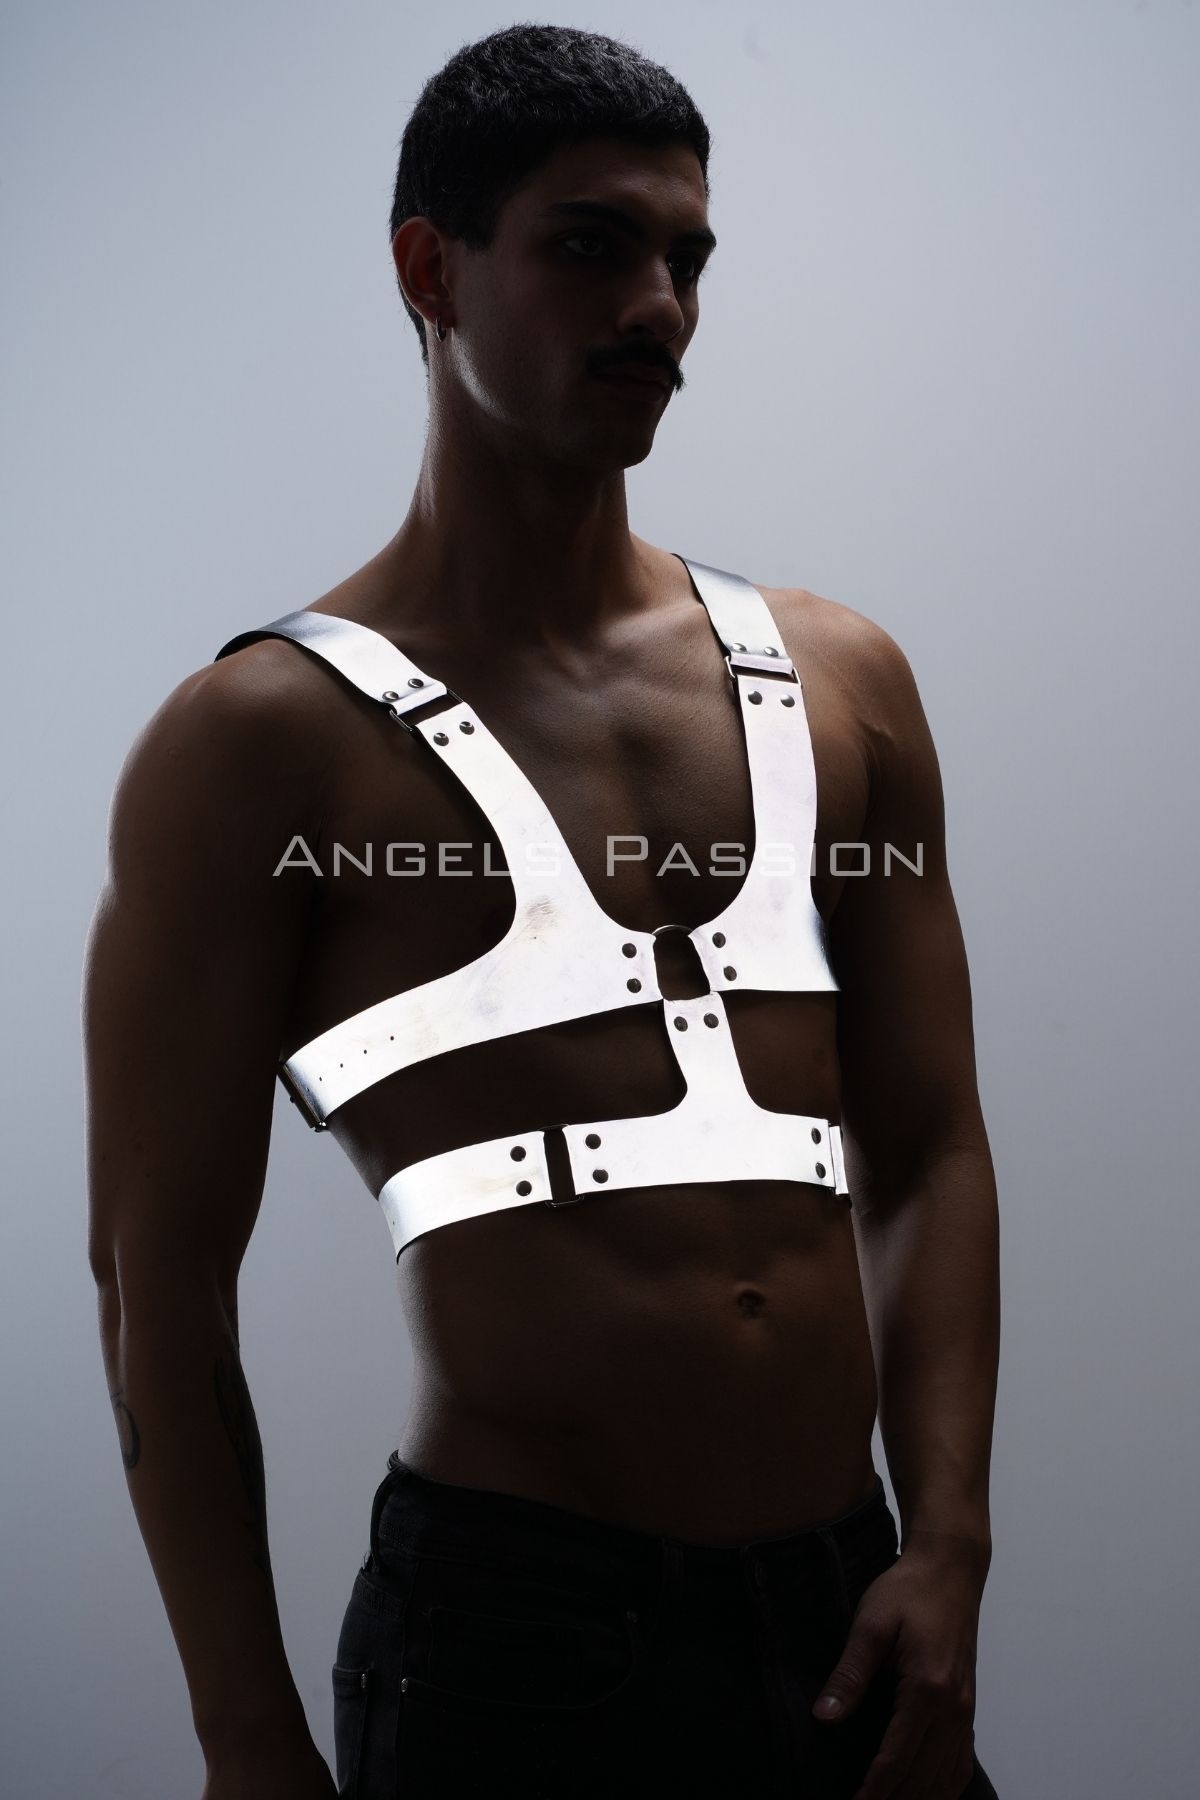 Reflektörlü (Karanlıkta Parlayan) Sert Göğüs Harness, Gay Harness Aksesuar, Gay Giyim - APFTM119